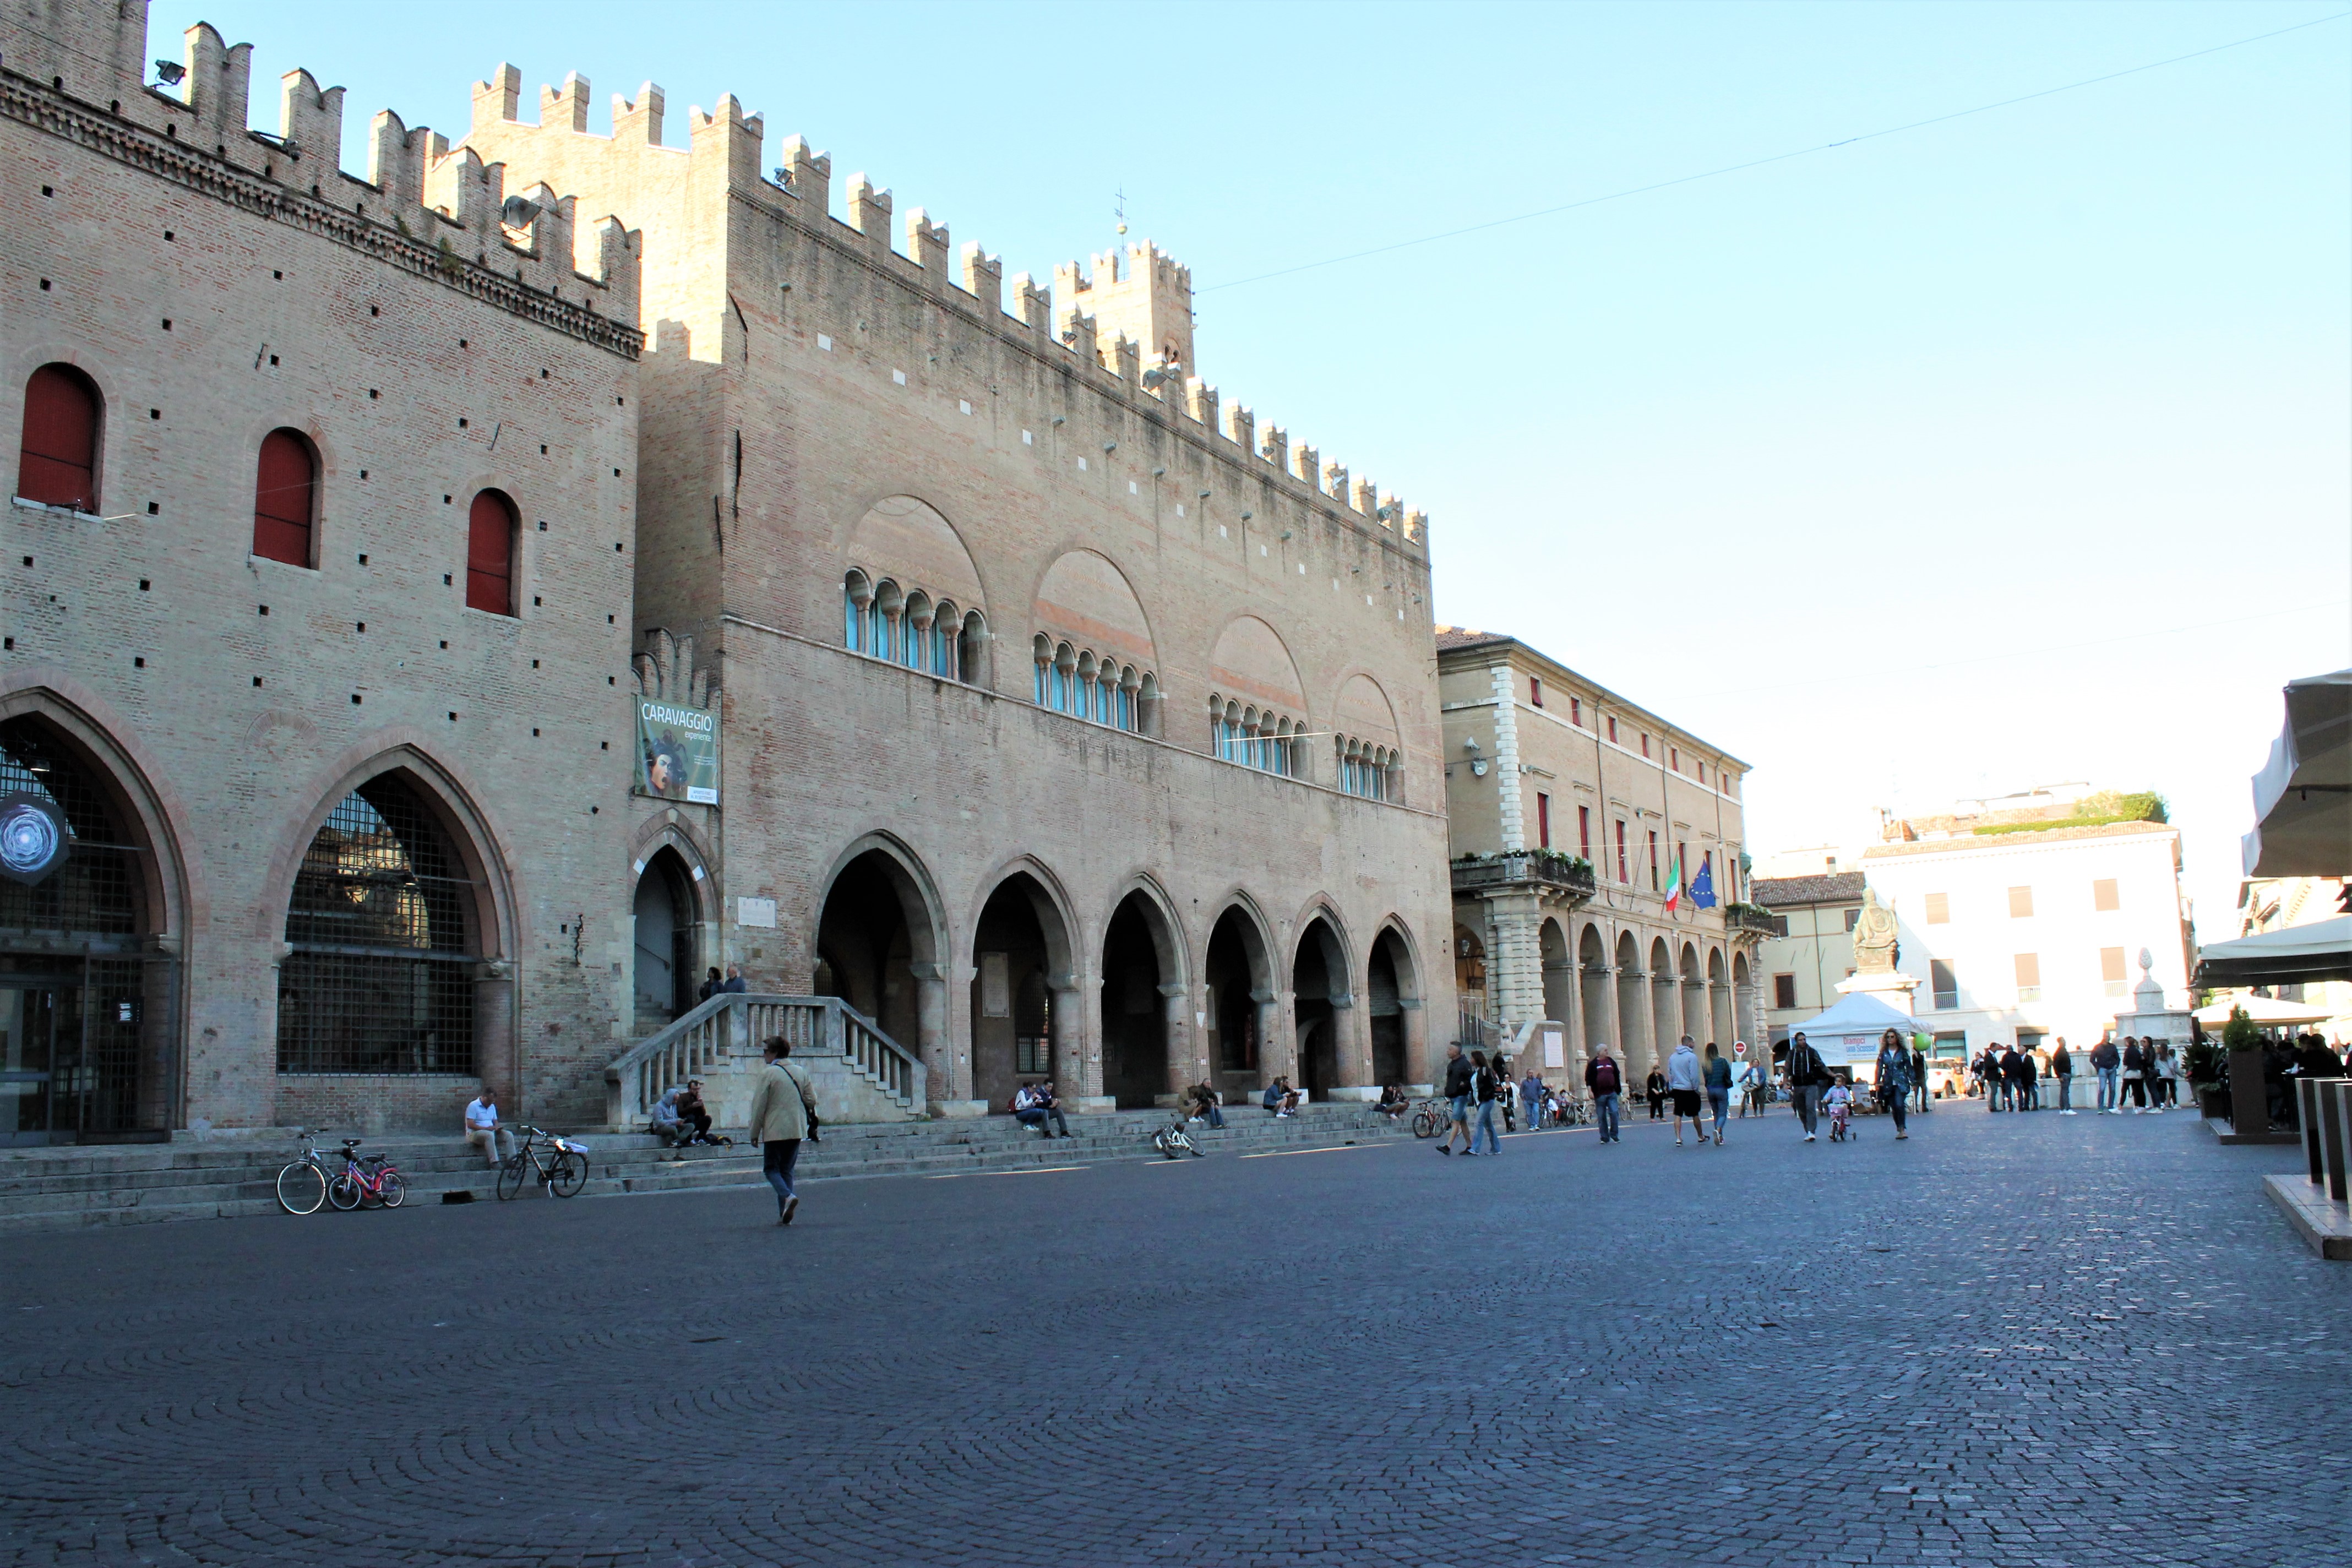 foto: https://upload.wikimedia.org/wikipedia/commons/a/a3/Piazza_Cavour_di_Rimini.jpg